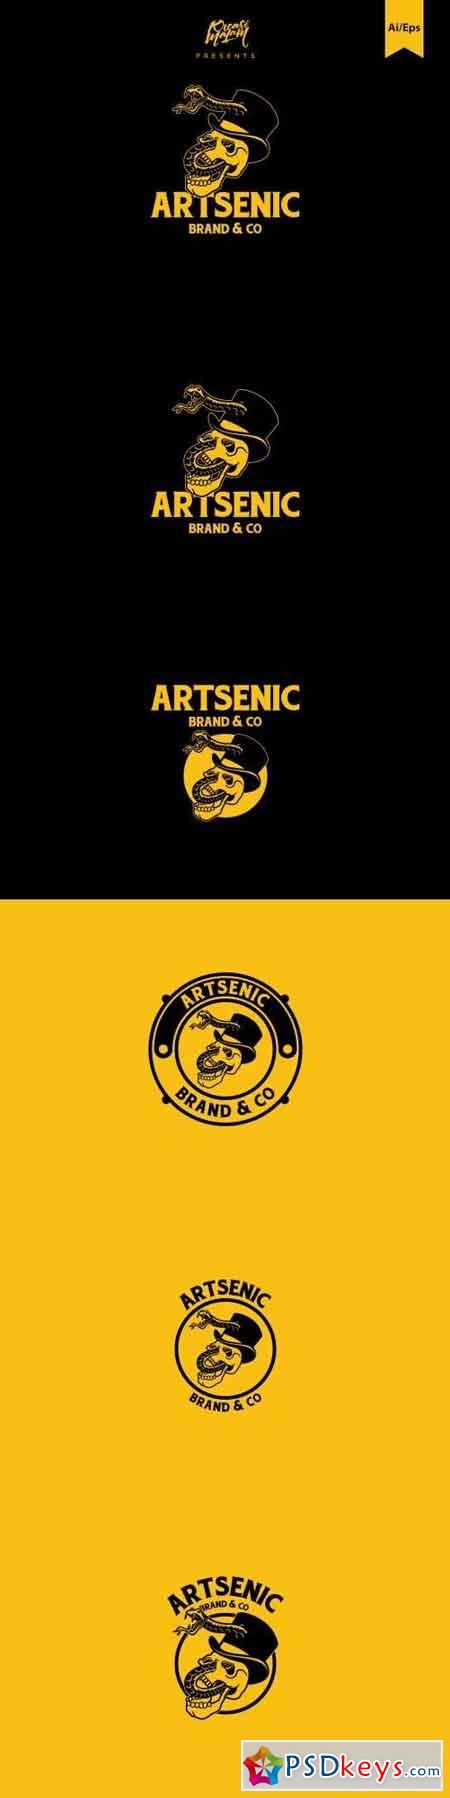 Artsenic Logo Template